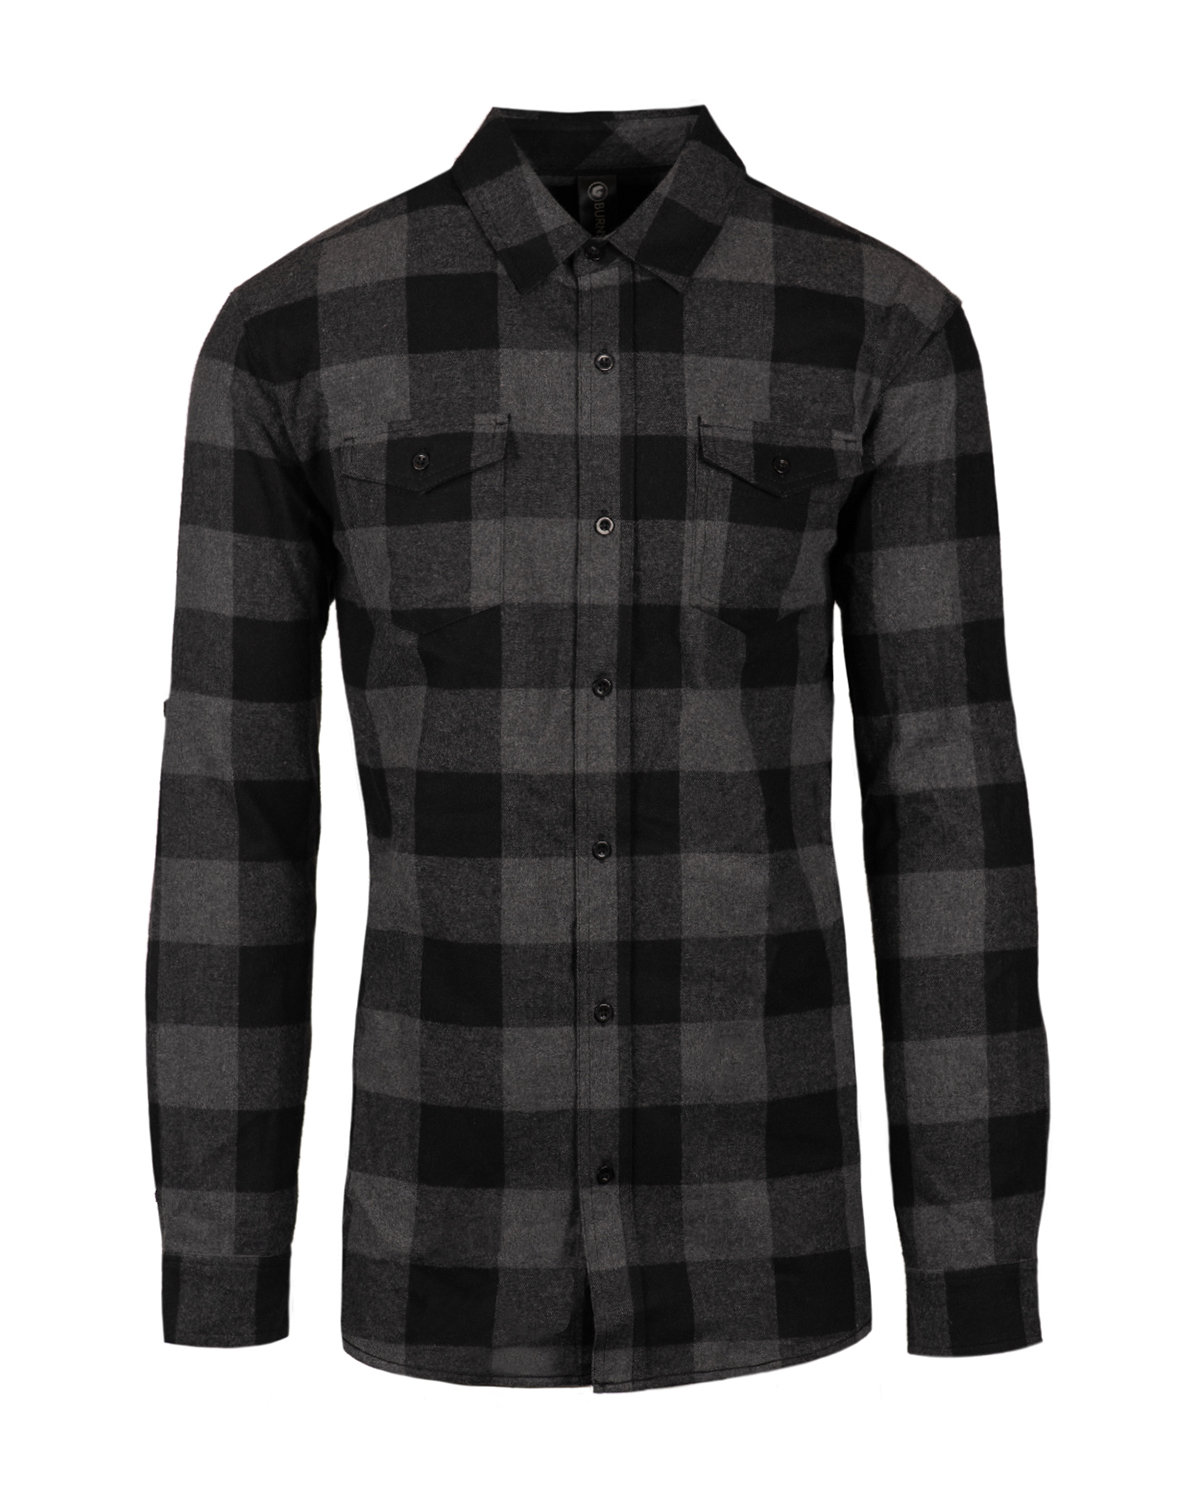 Burnside Men's Plaid Flannel Shirt CHARCOAL/ BLACK 